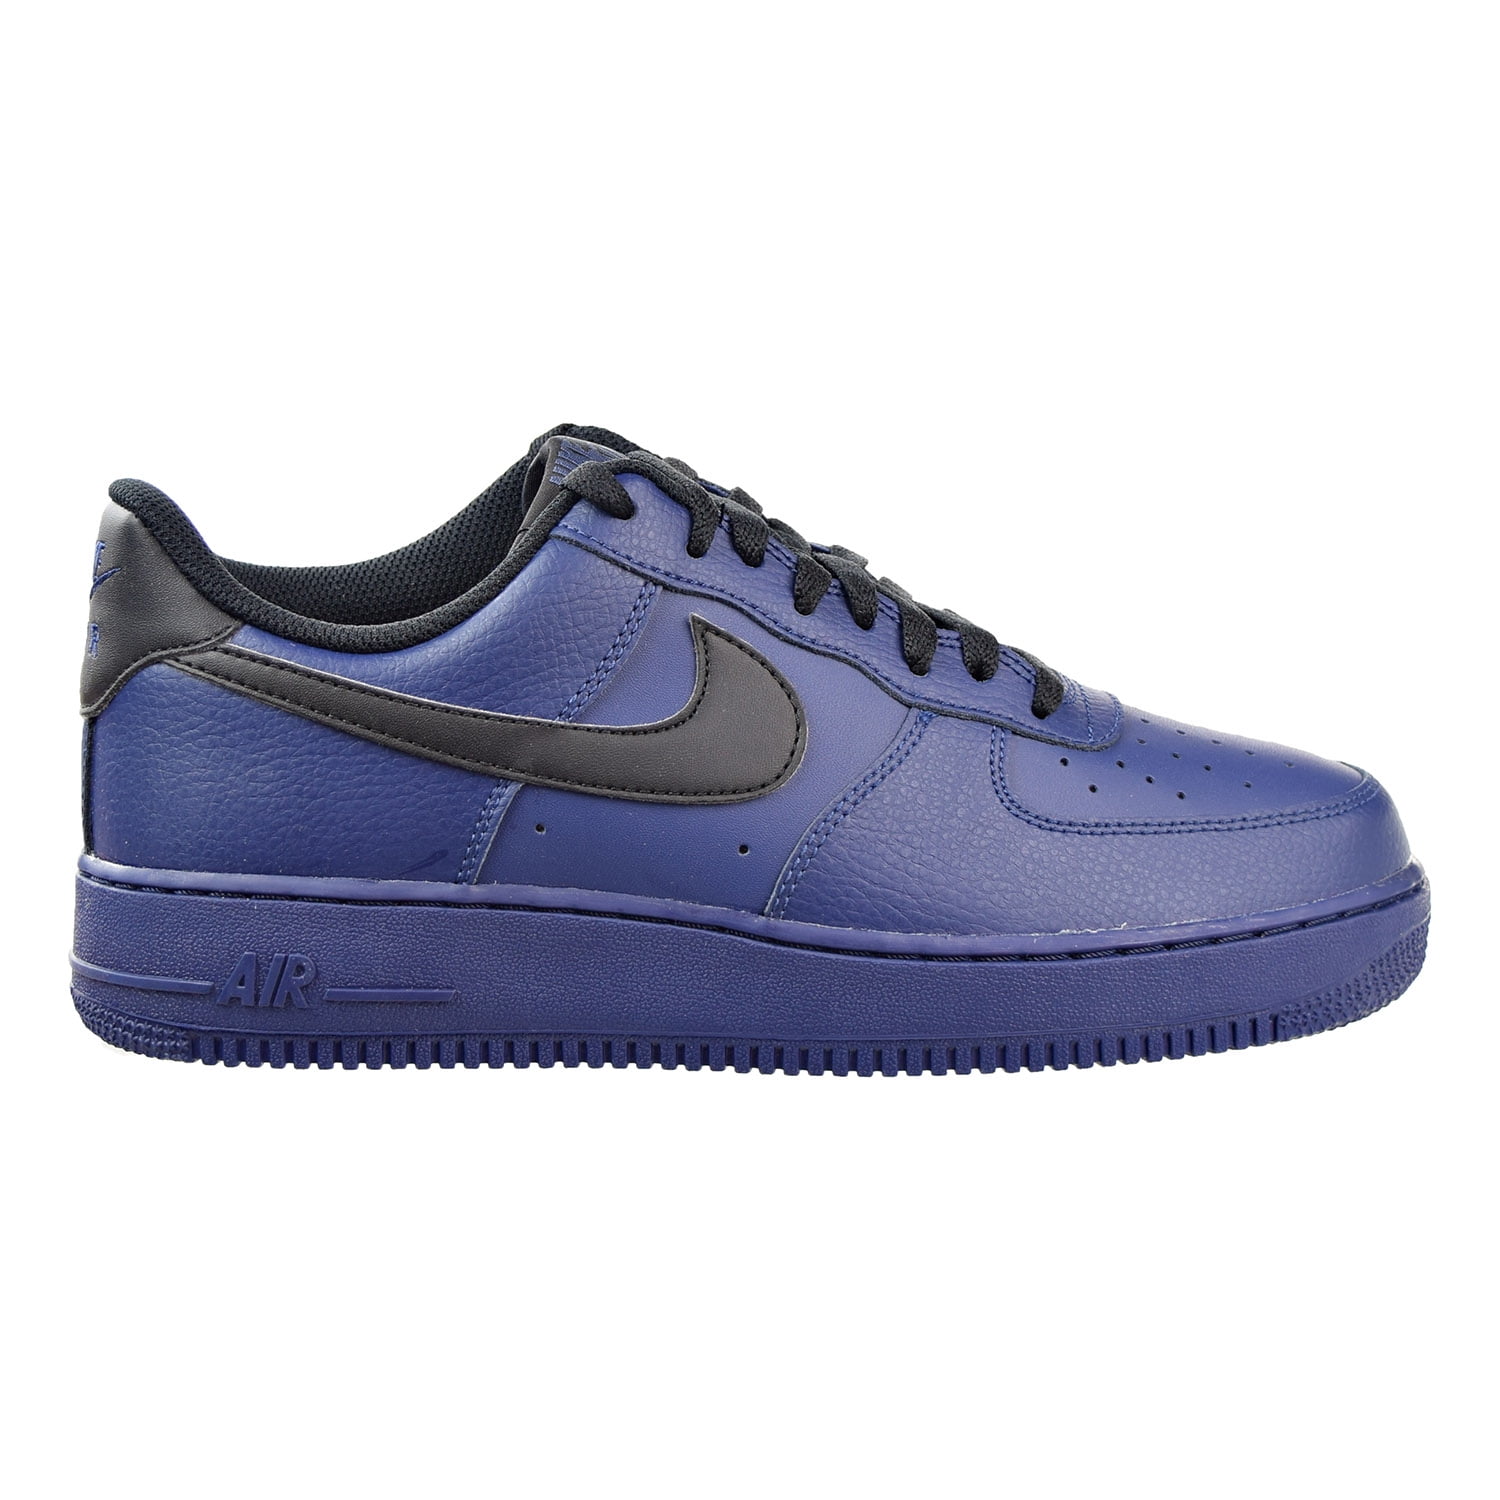 Nike Air 07 Men's Shoe Blue/Black 315122-423 - Walmart.com